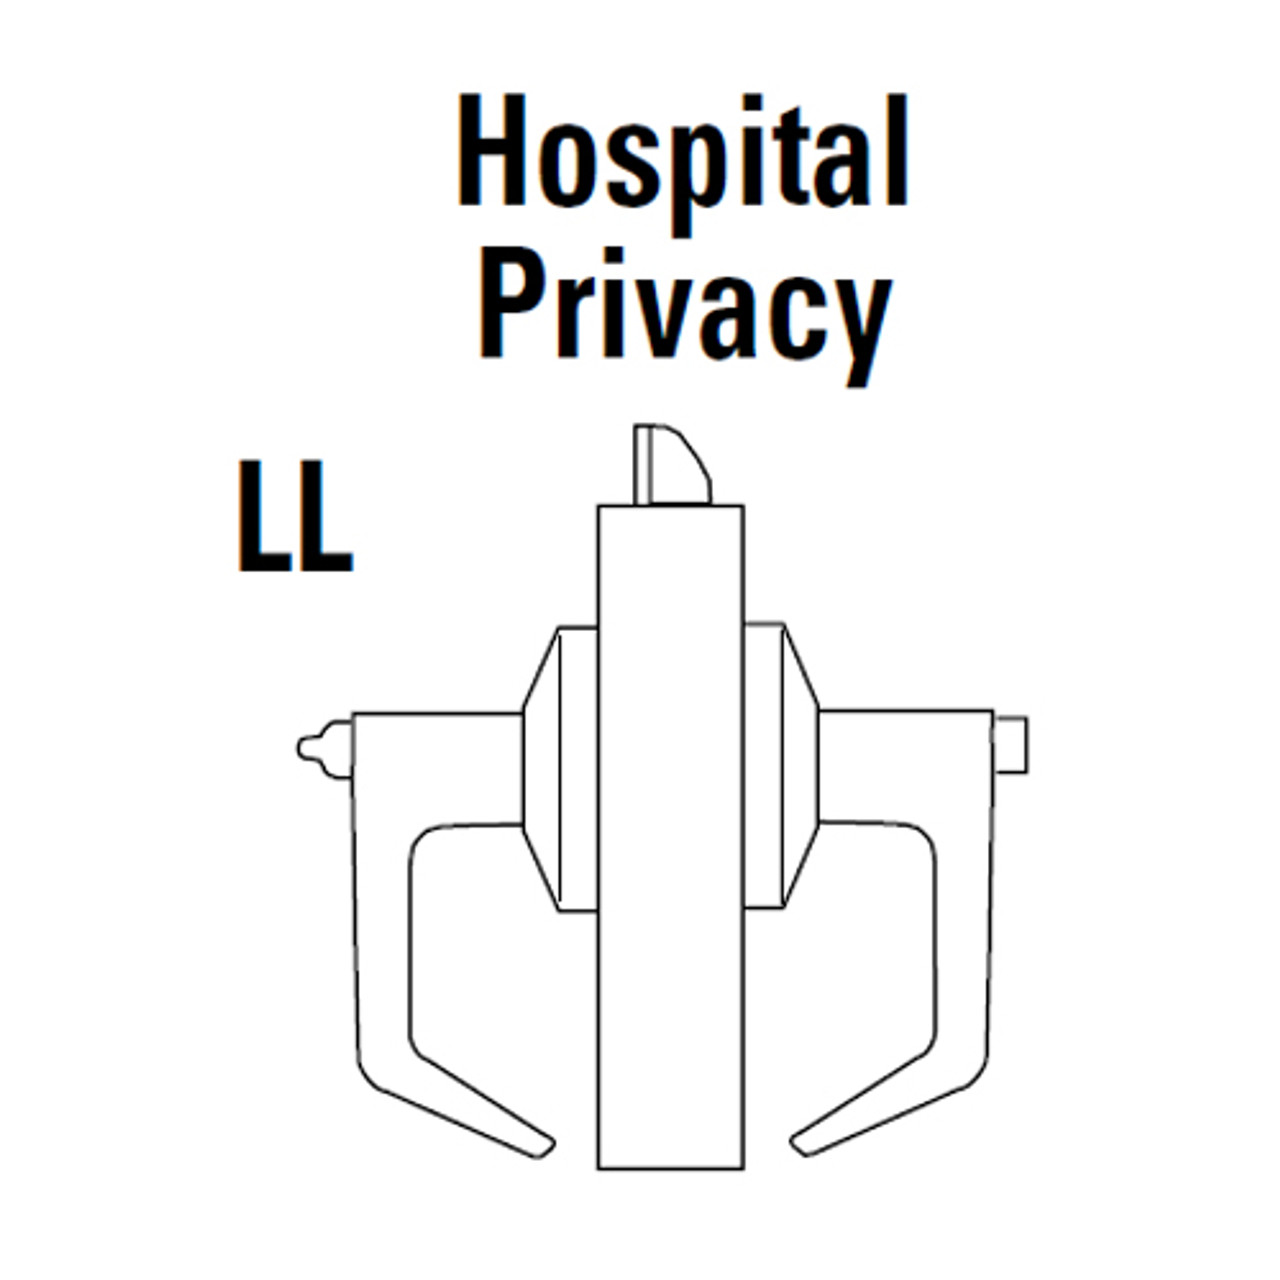 9K30LL14LSTK619 Best 9K Series Hospital Privacy Heavy Duty Cylindrical Lever Locks in Satin Nickel